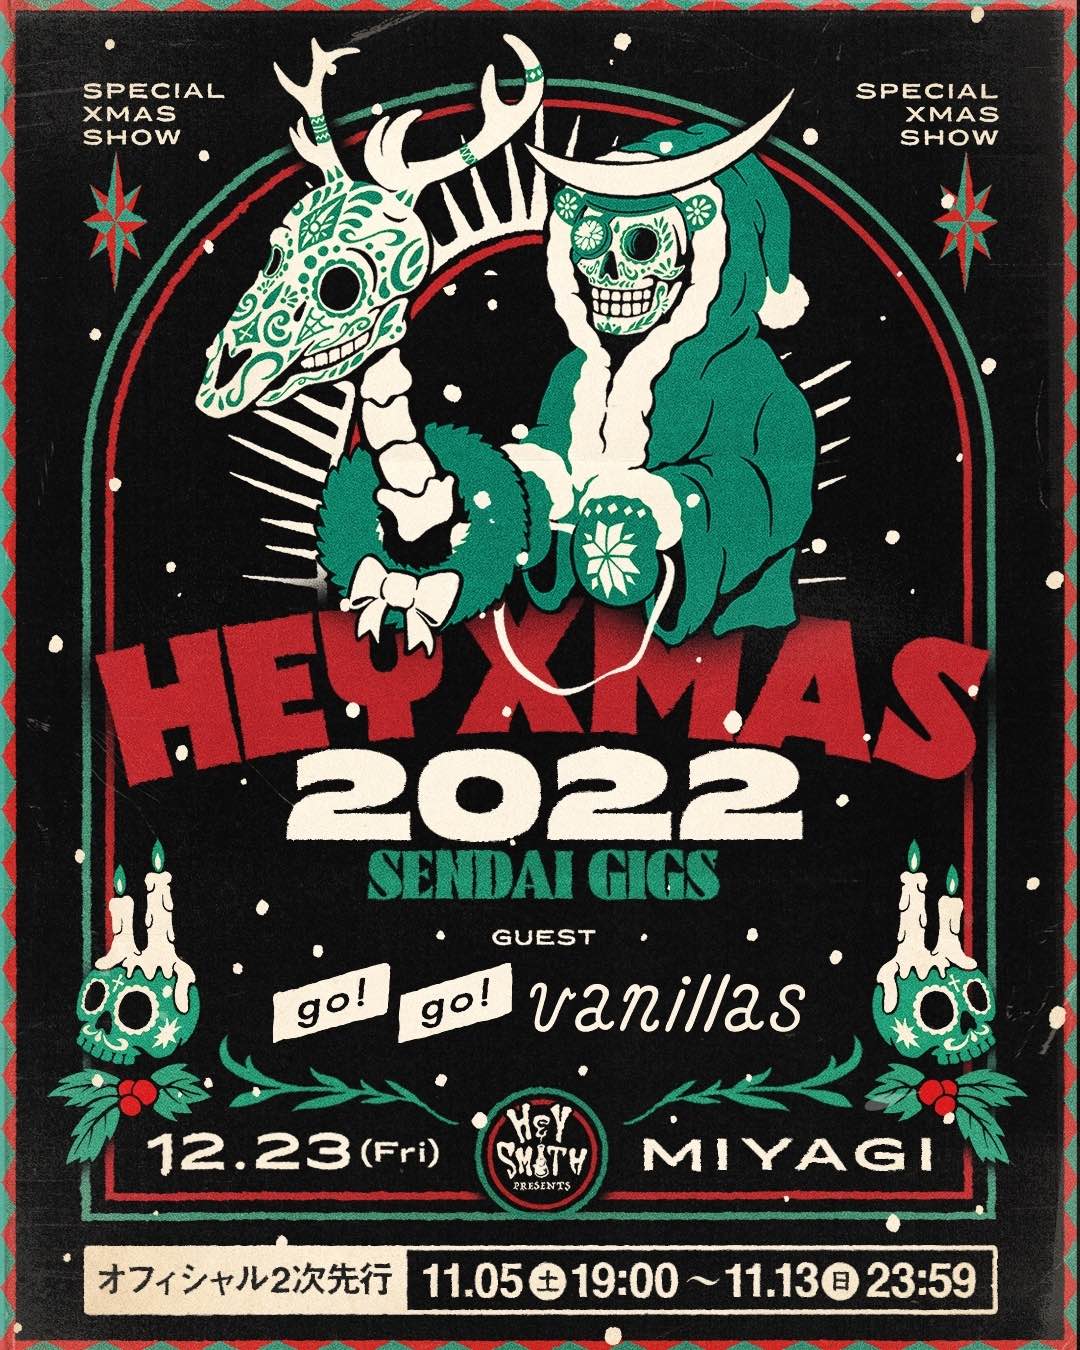 仙台 GIGS <span class="live-title">HEY-Xmas 2022</span> 